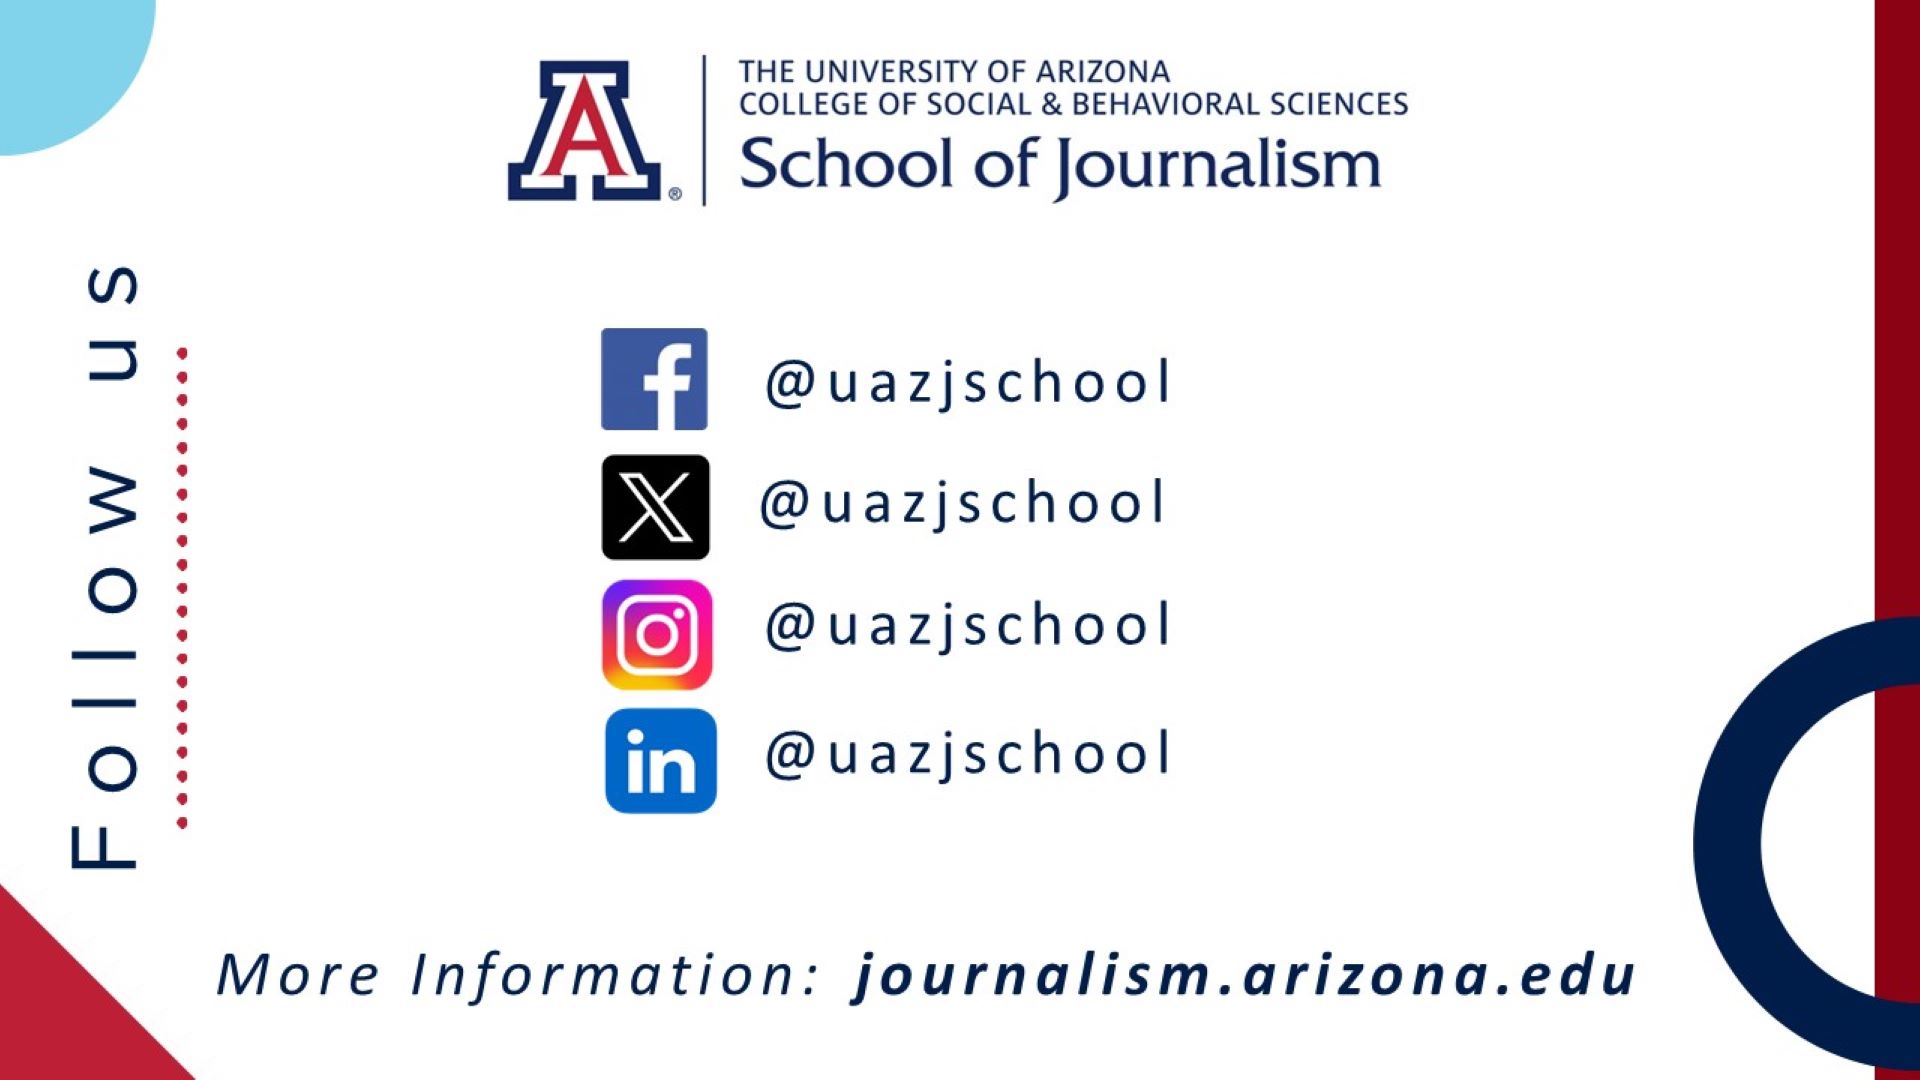 Follow the School of Journalism @uazjschool on all platforms